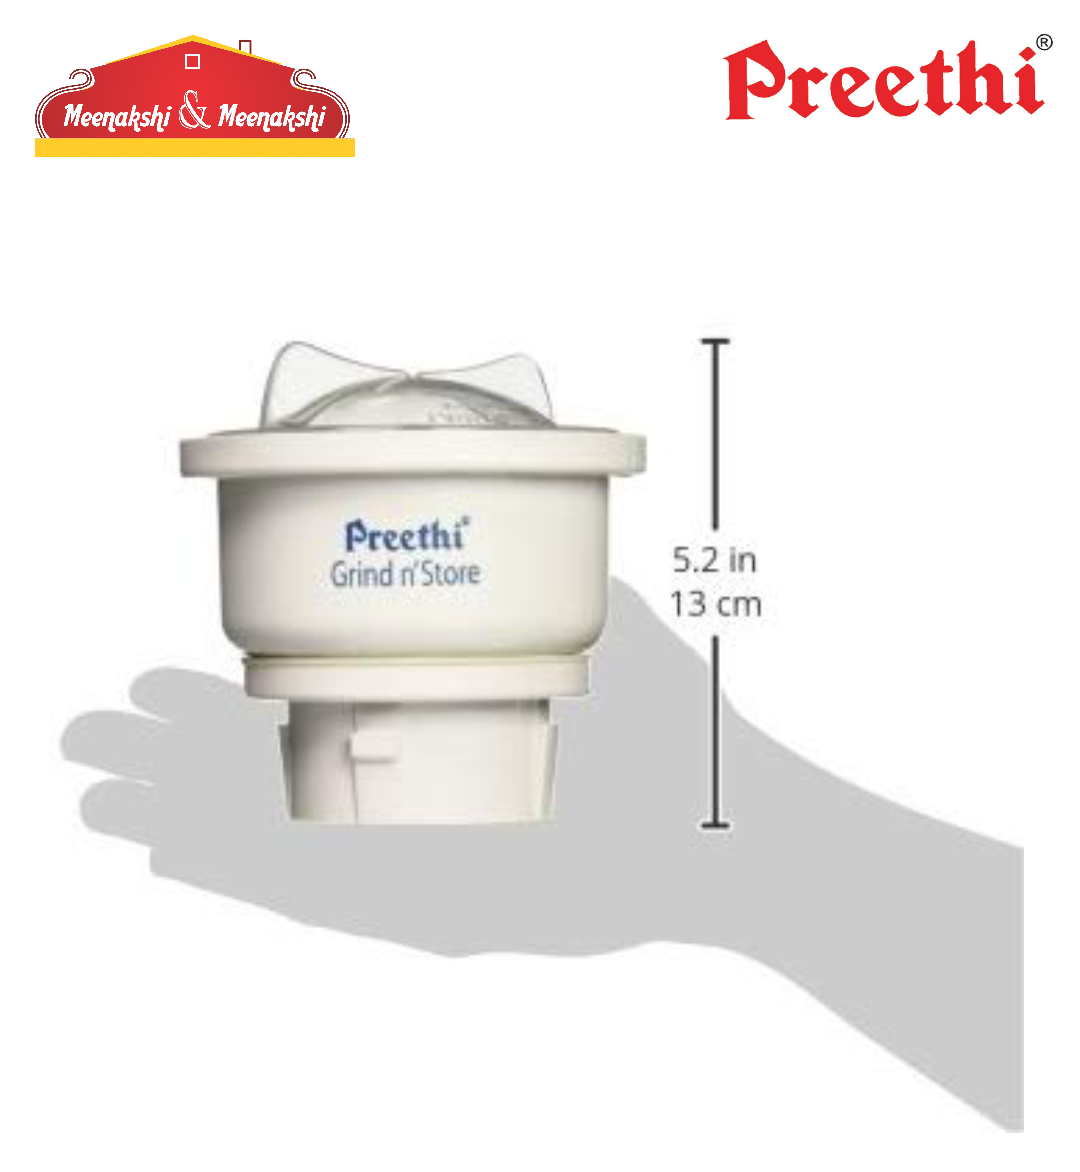 Preethi 0.4-Liter Grind N' Store Blue Leaf Chutney Jar